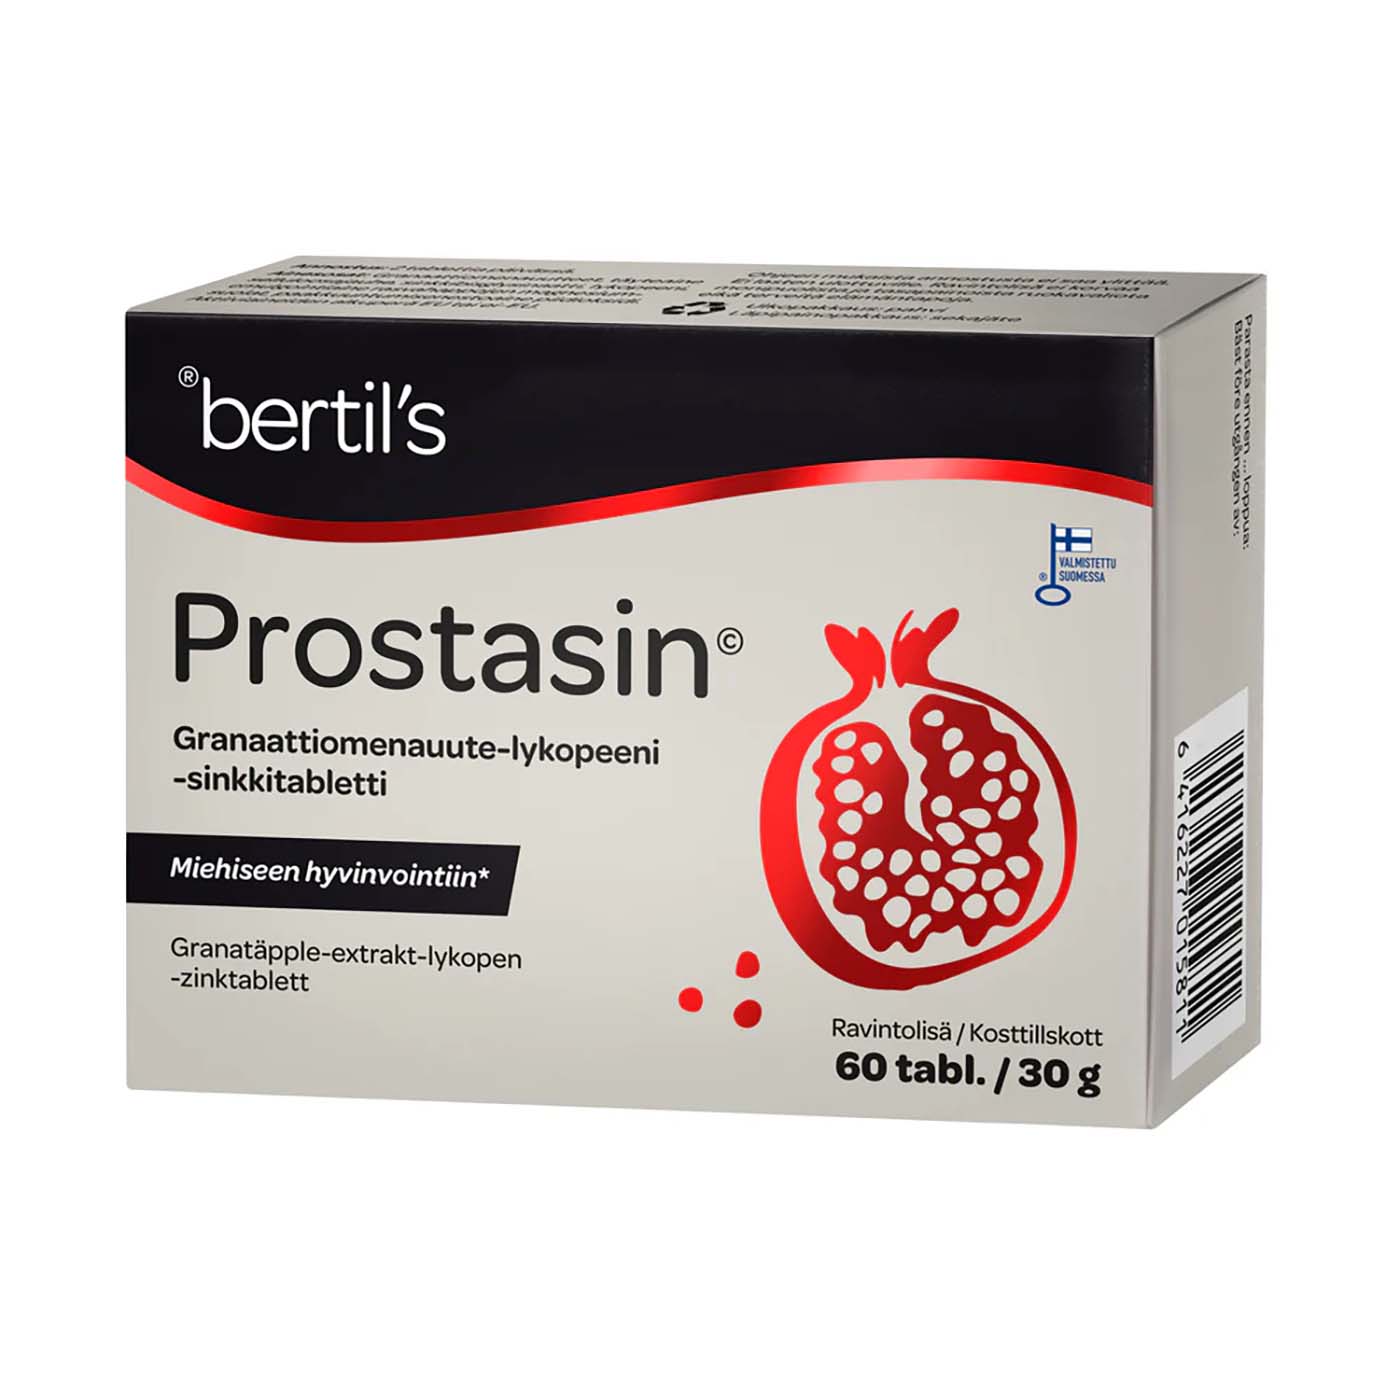 Prostasin supplement